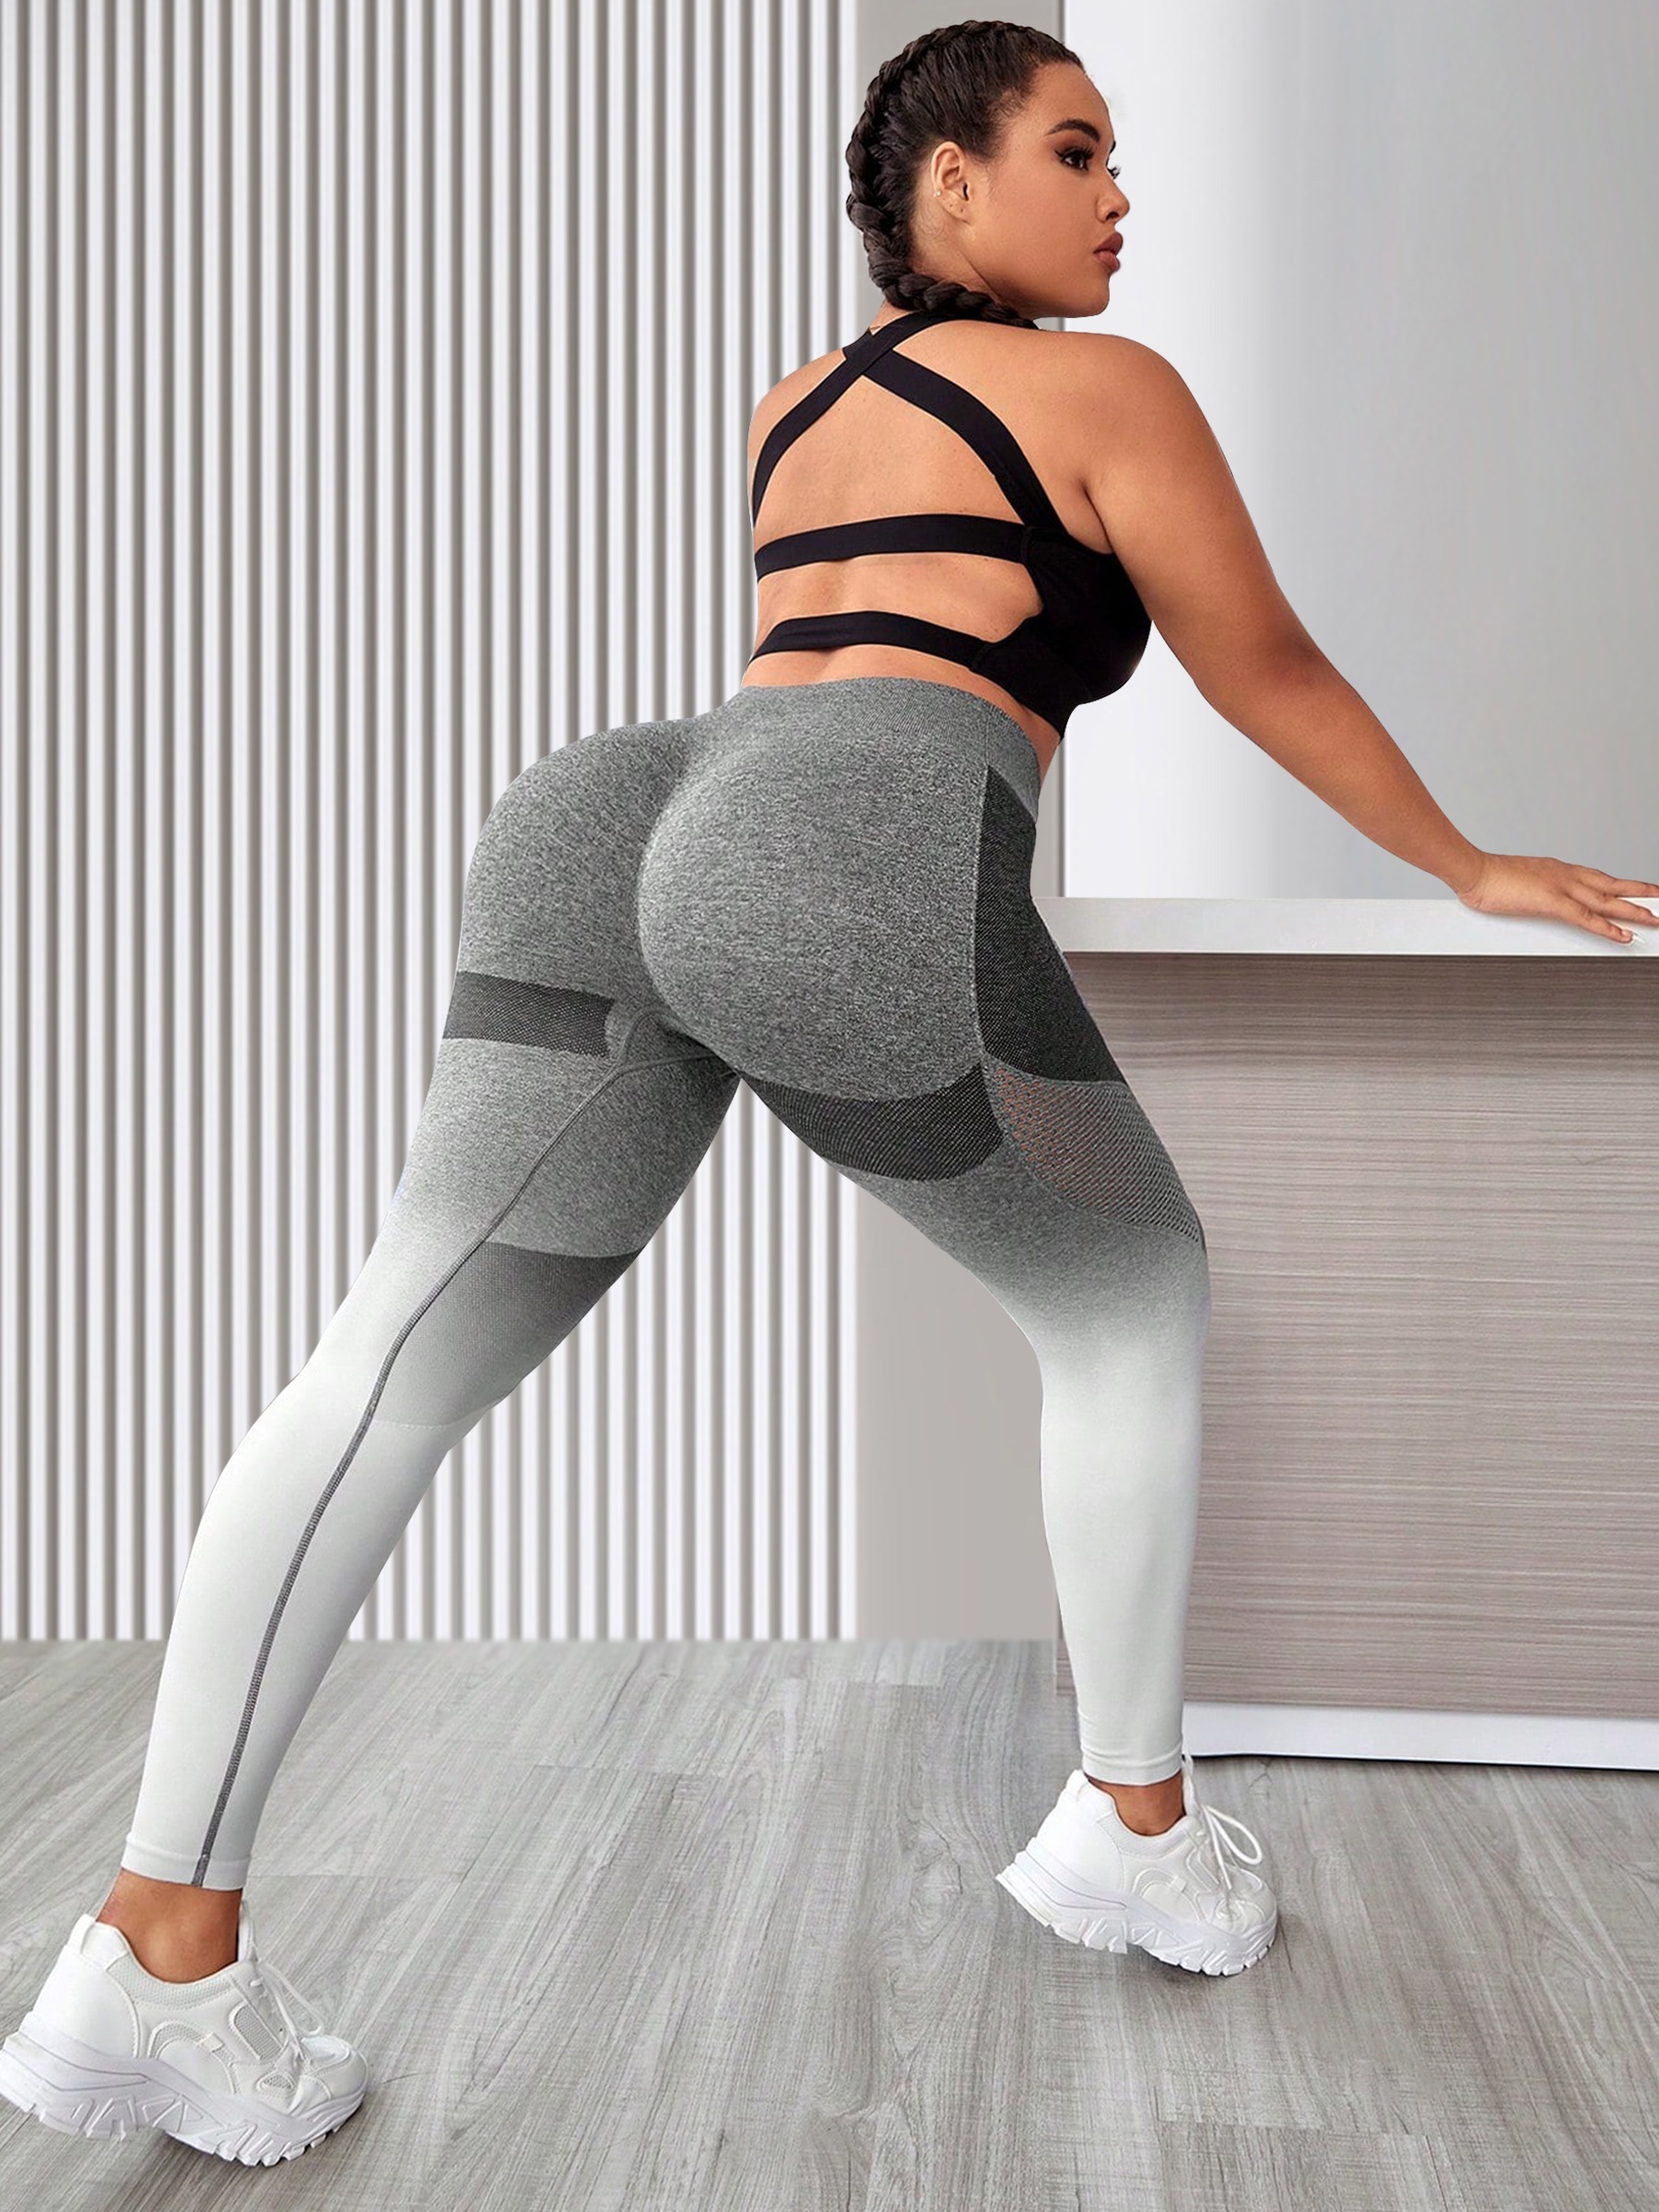  Women Plus Size Workout Butt Lifting Hot Pants